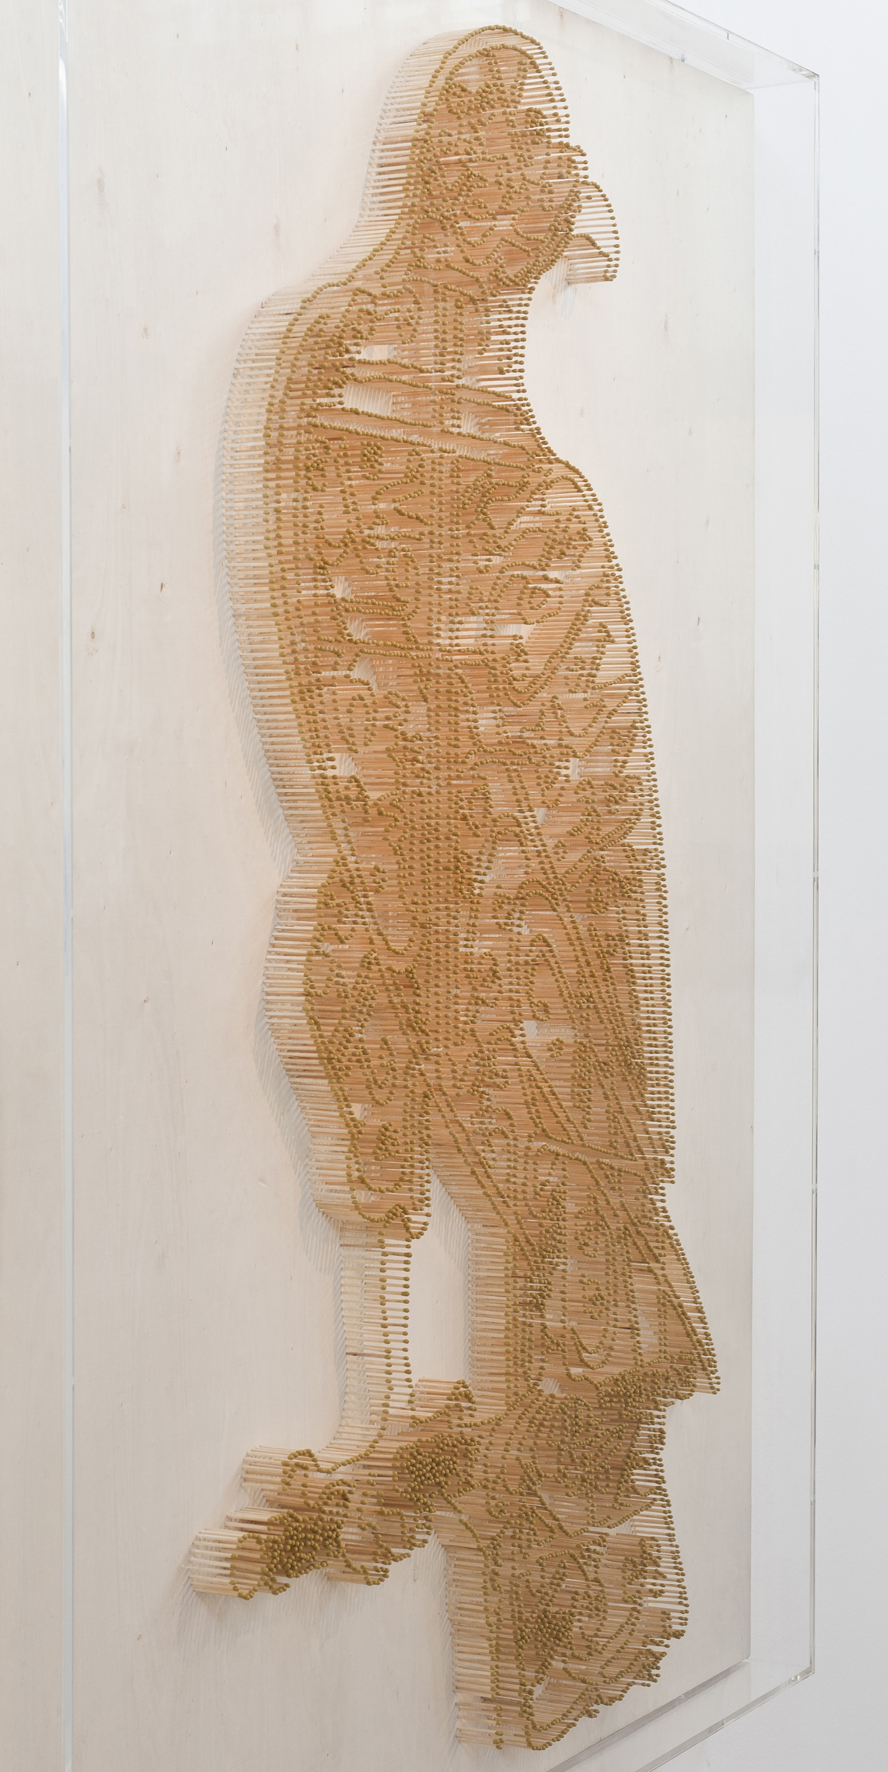 Oxymoron, El Nesr, 2012 – 6,350 matches on wood, Plexiglass  150 x 120 cm unique work 